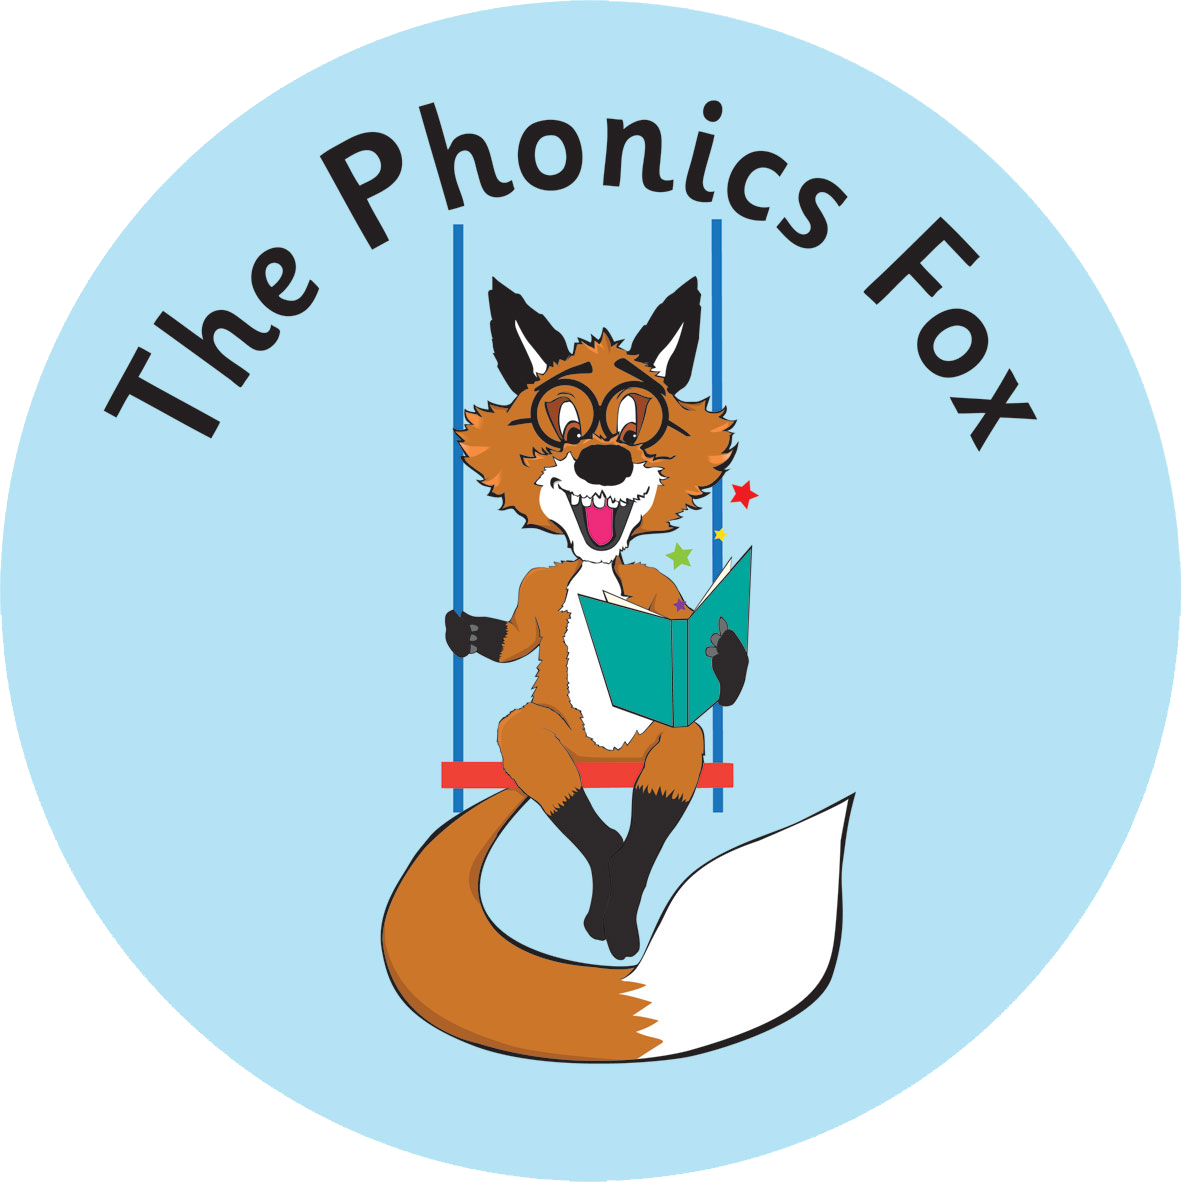 The Phonics Fox- Norwich's logo